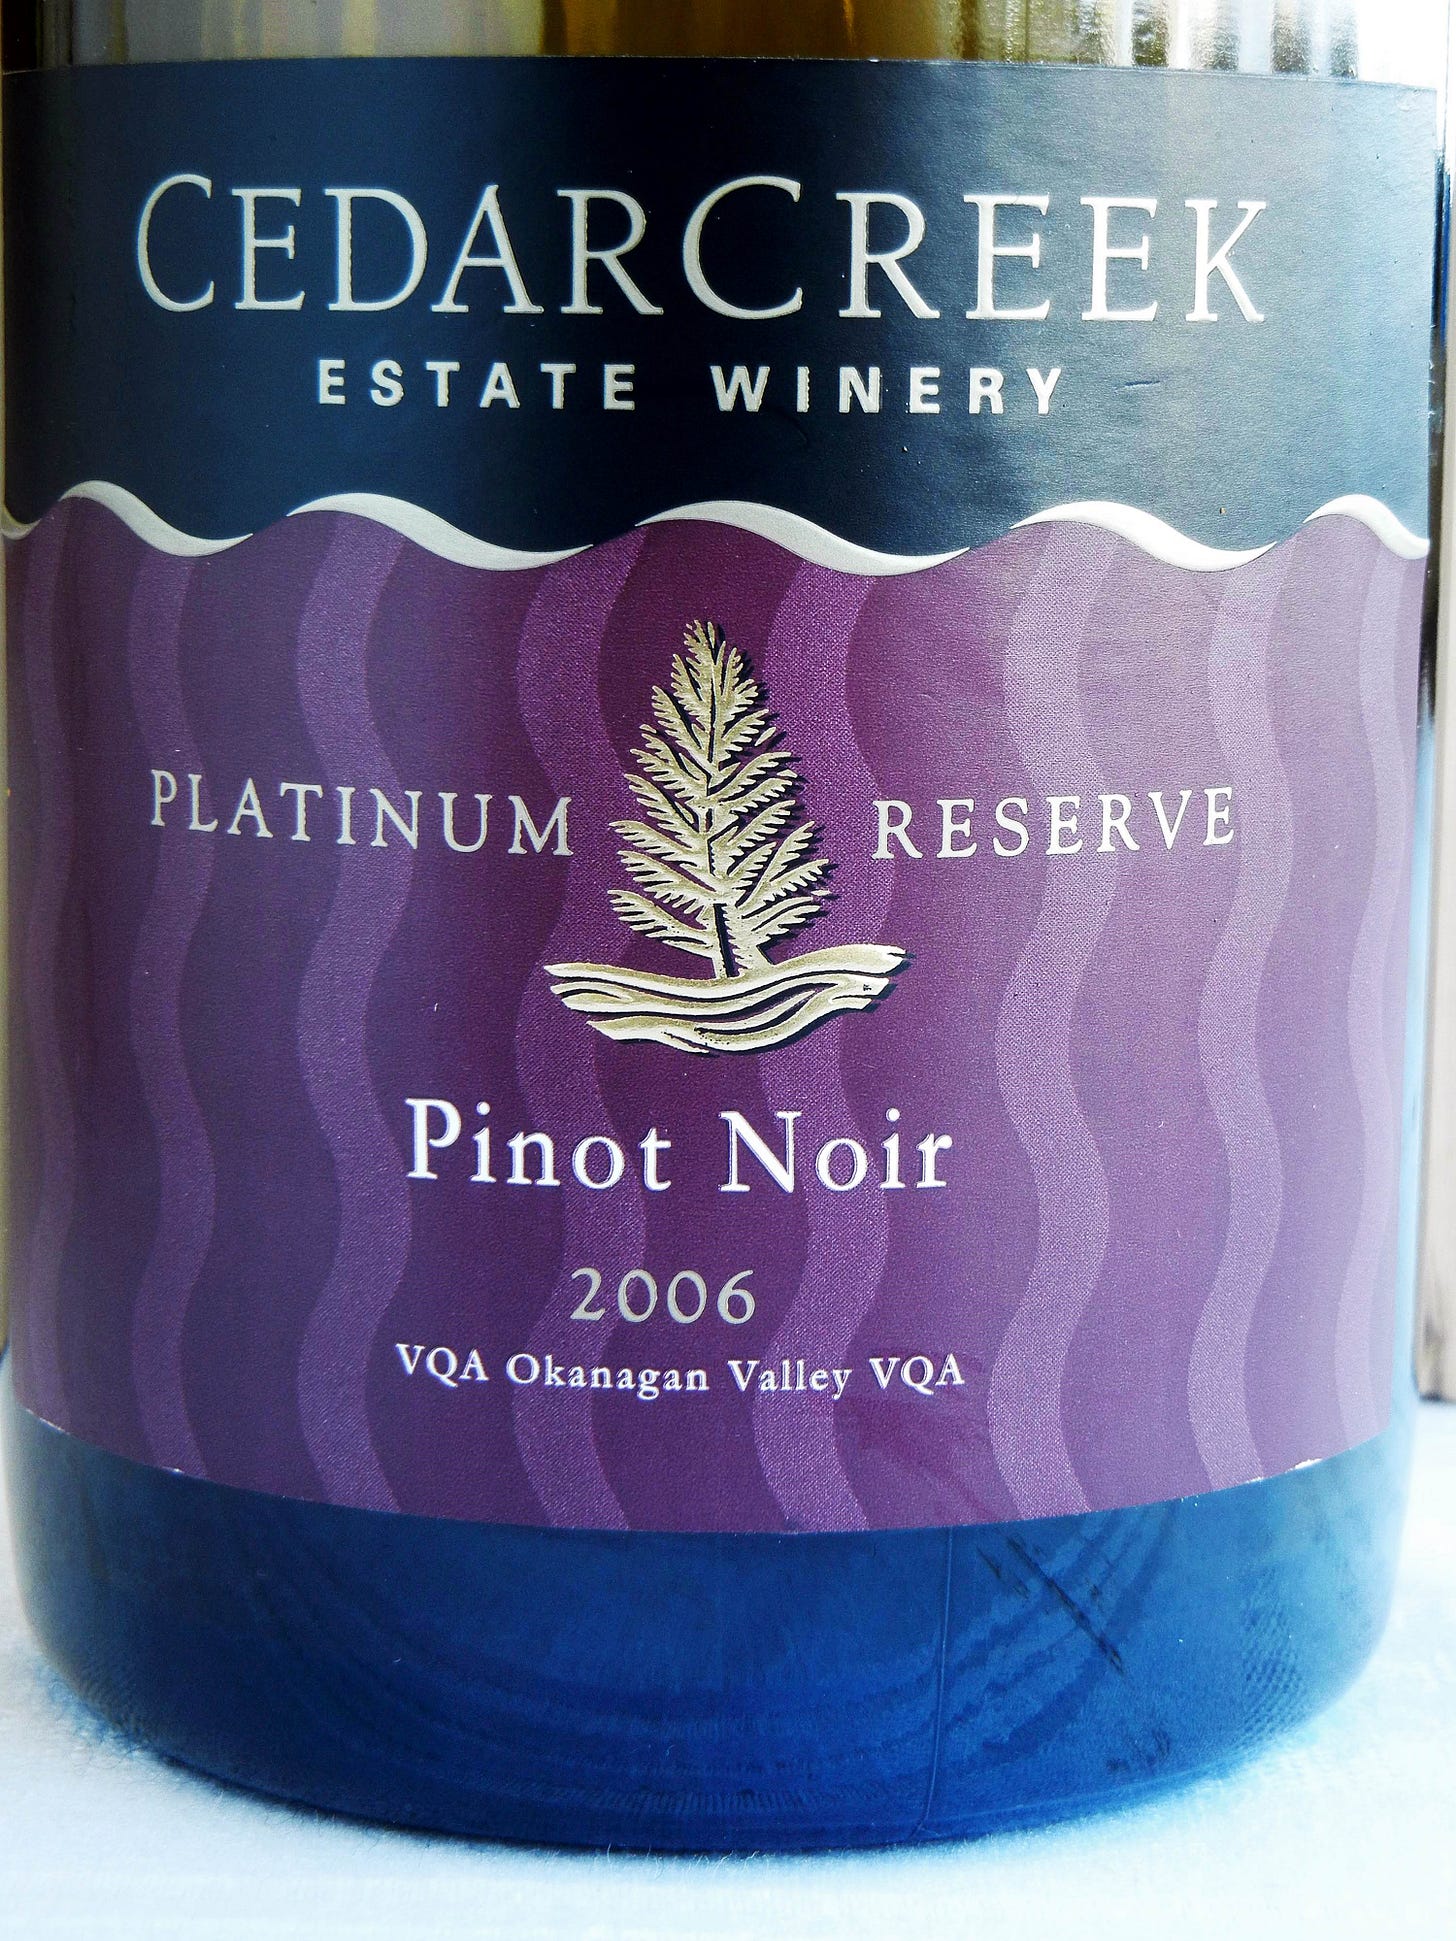 Cedar Creek Platinum Reserve Pinot Noir 2006 Label - BC Pinot Noir Tasting Review 12